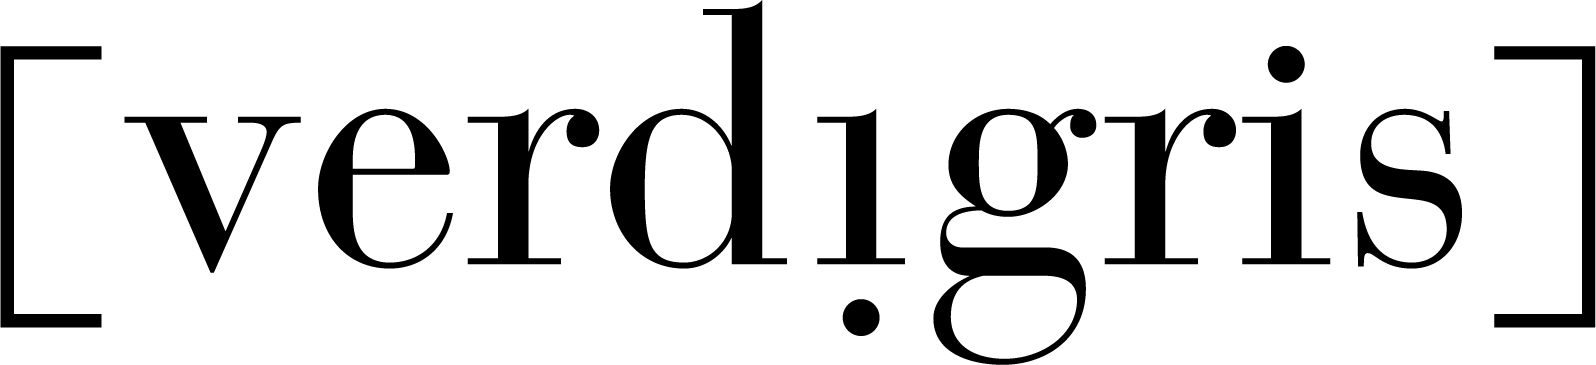 Verdigris Ensemble logo